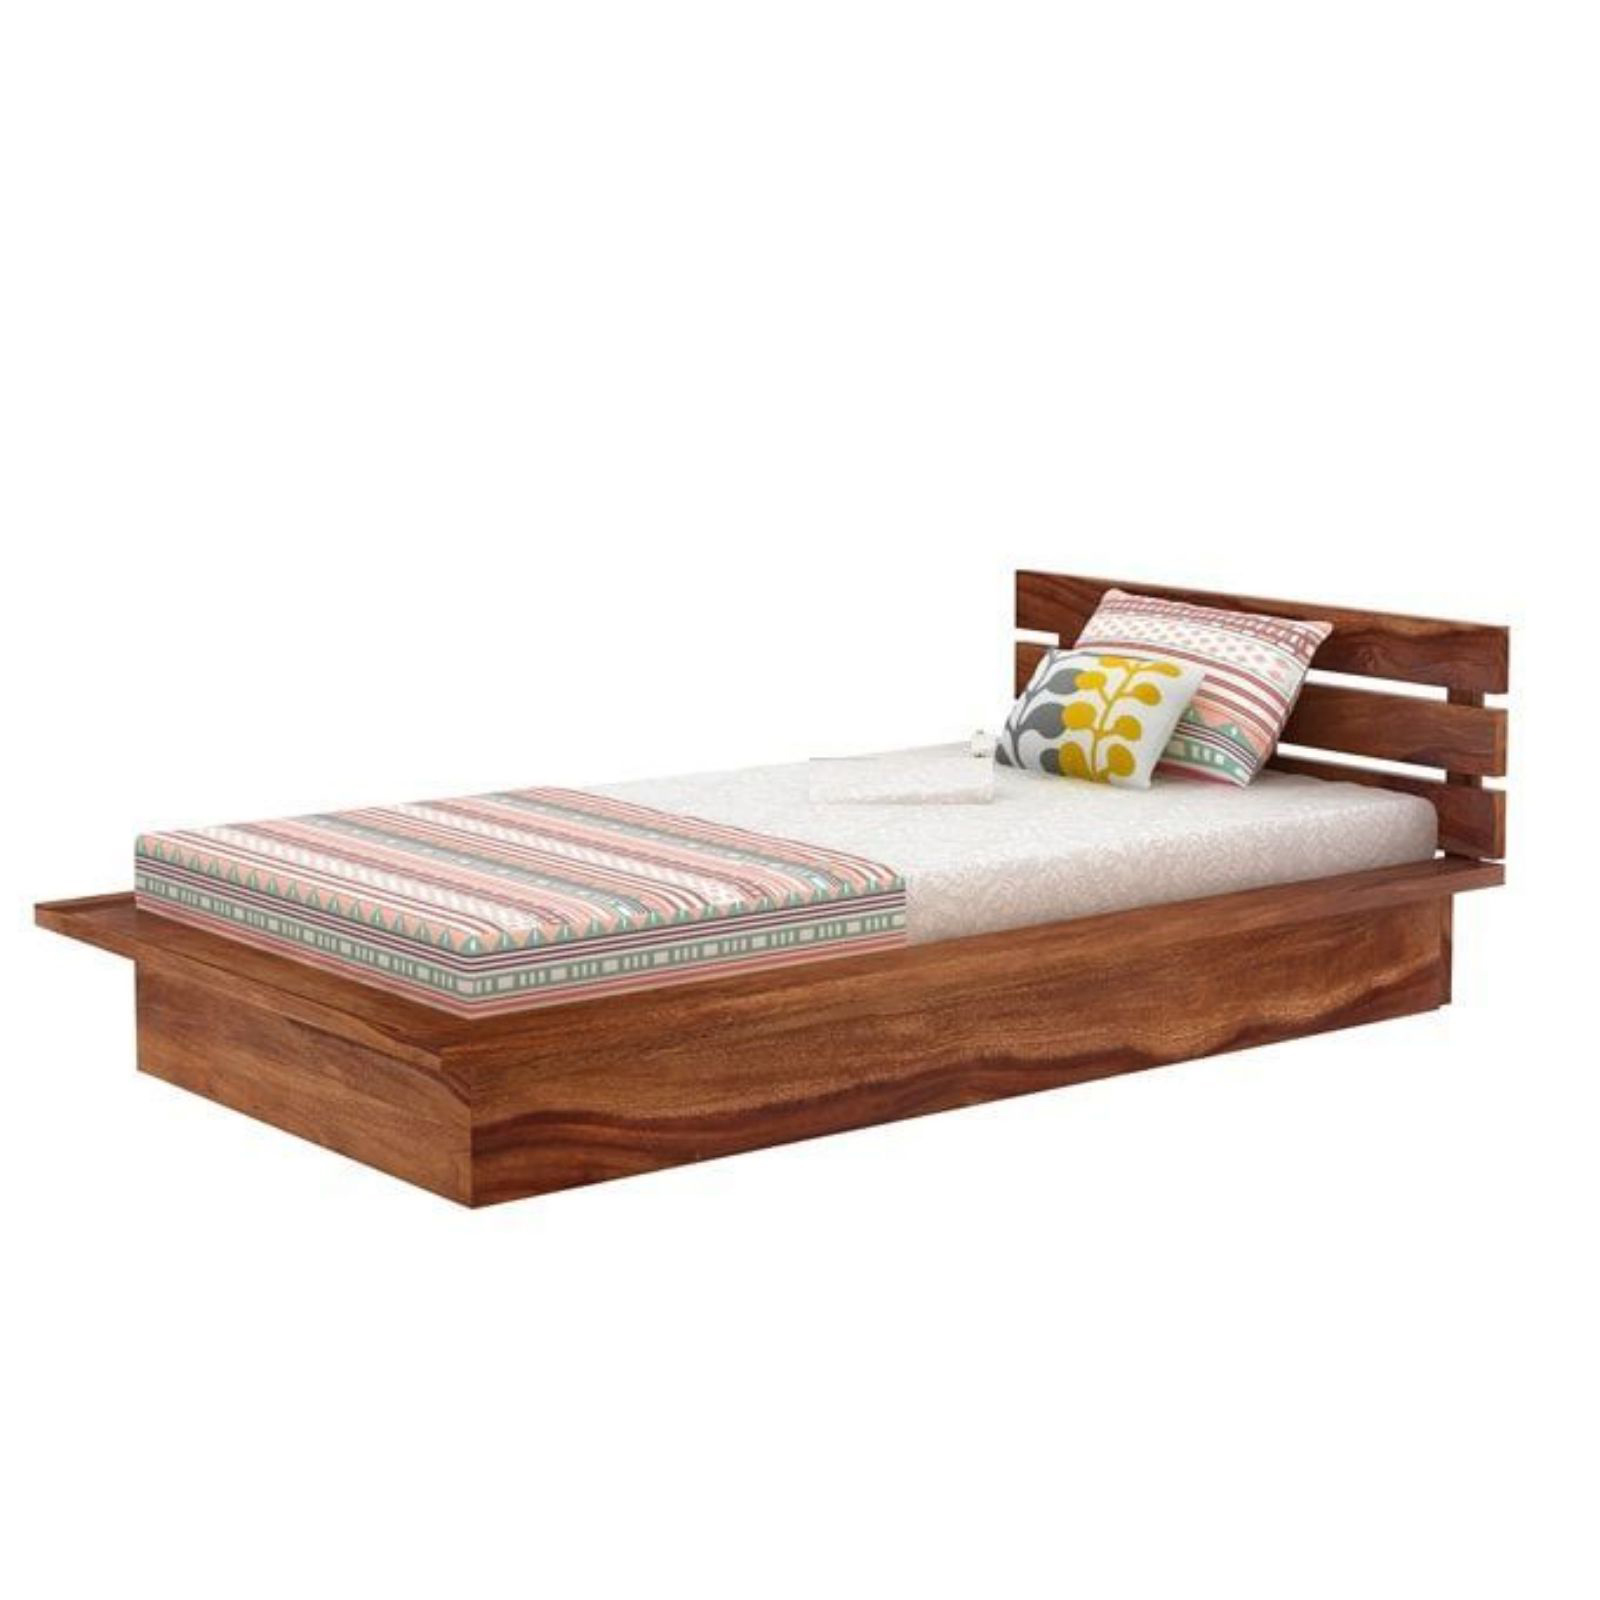 Plateform Single Bed